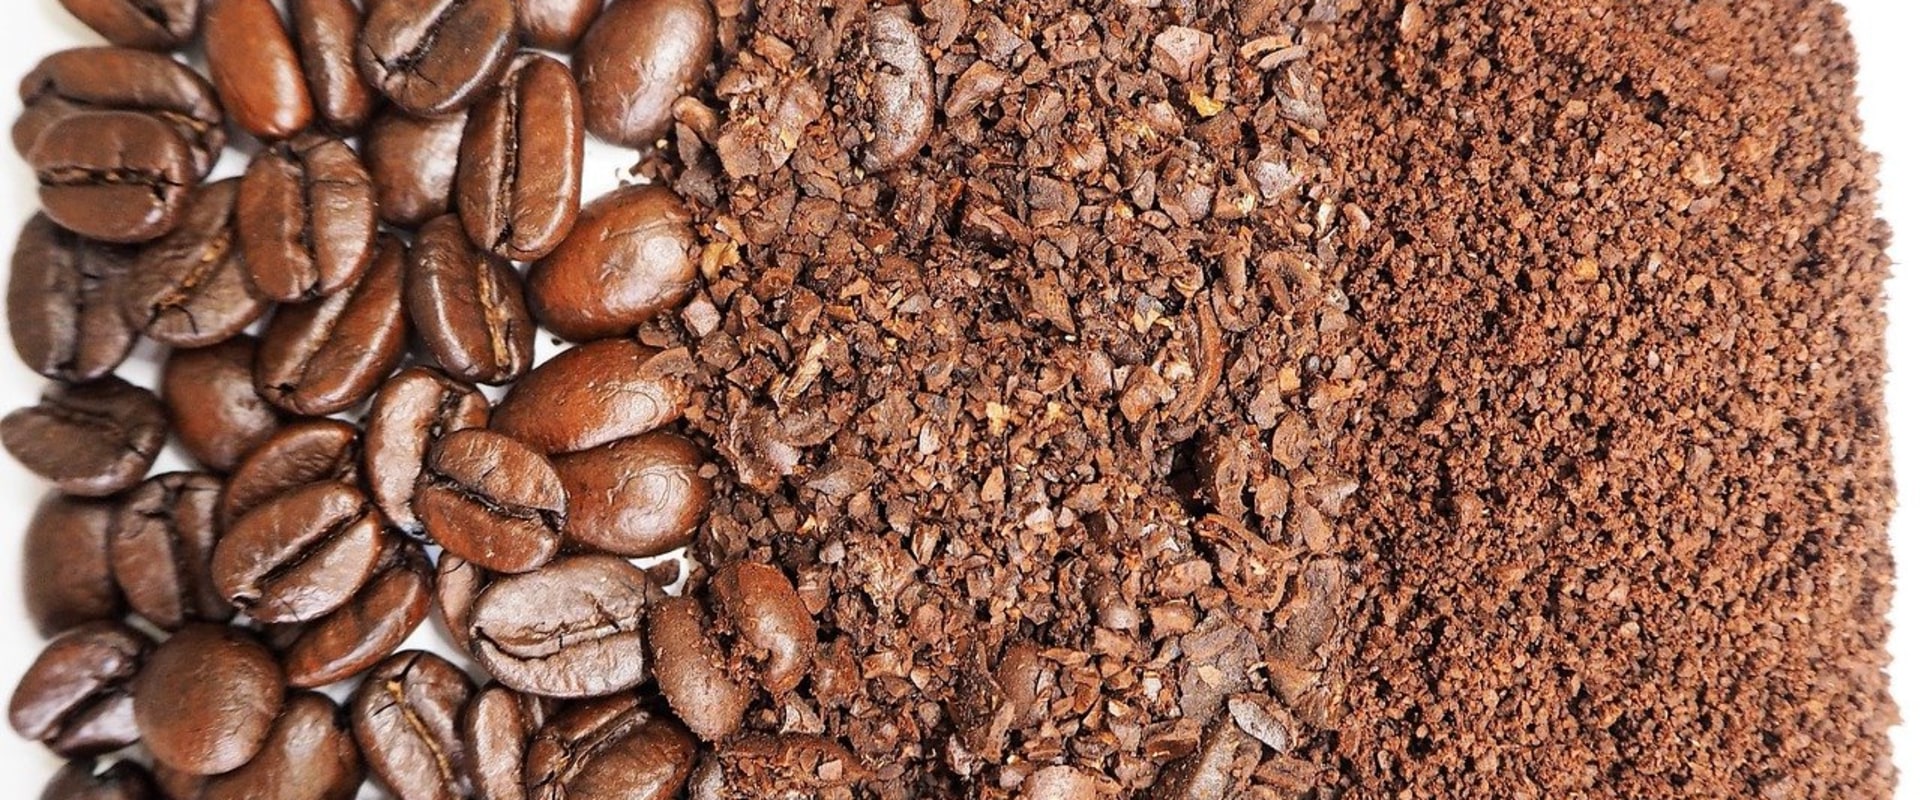 Does steeping coffee longer make it stronger?